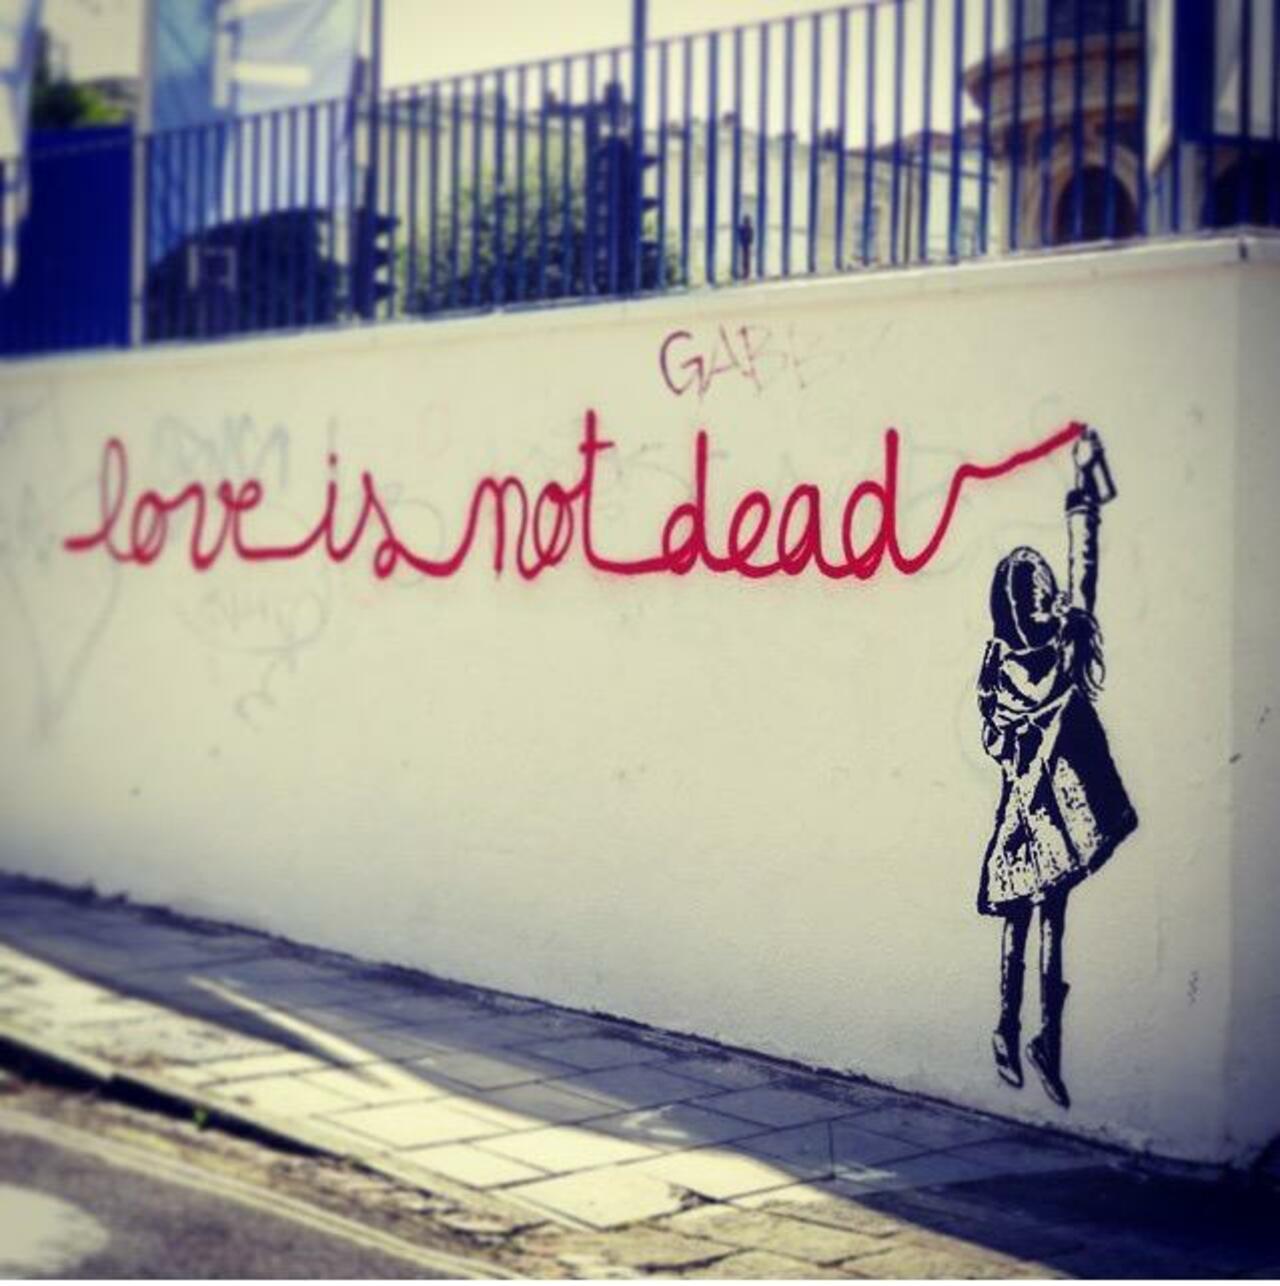 RT @GoogleStreetArt: Love is not dead 

Street Art by Goin 
#arte #art #graffiti #streetart http://t.co/oK1EgbRYWd